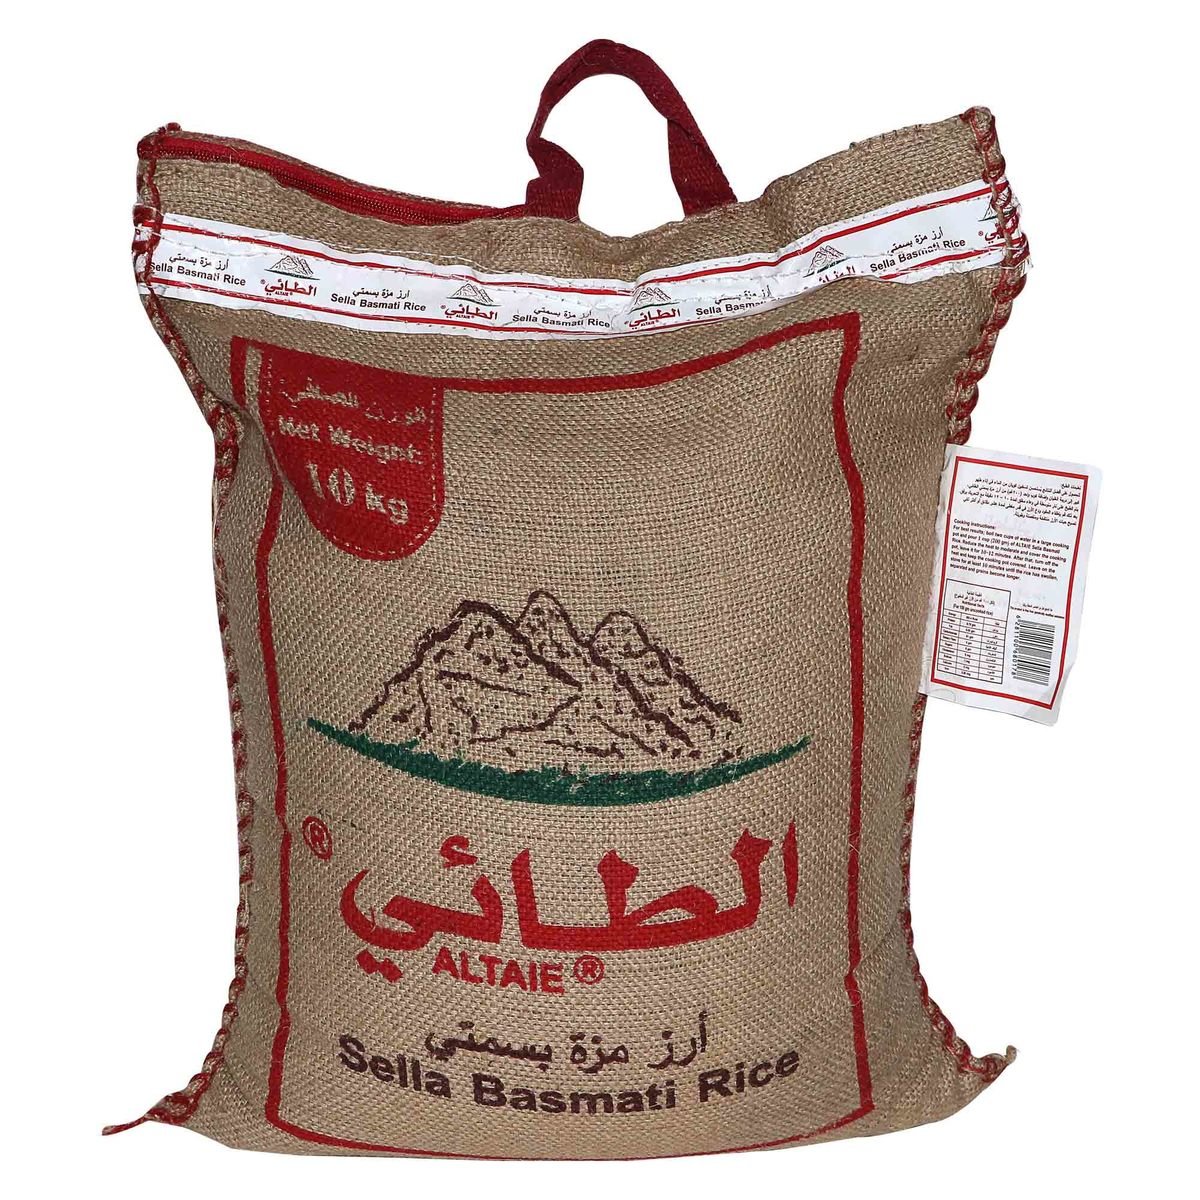 Altaie Sella Basmati Rice 10kg